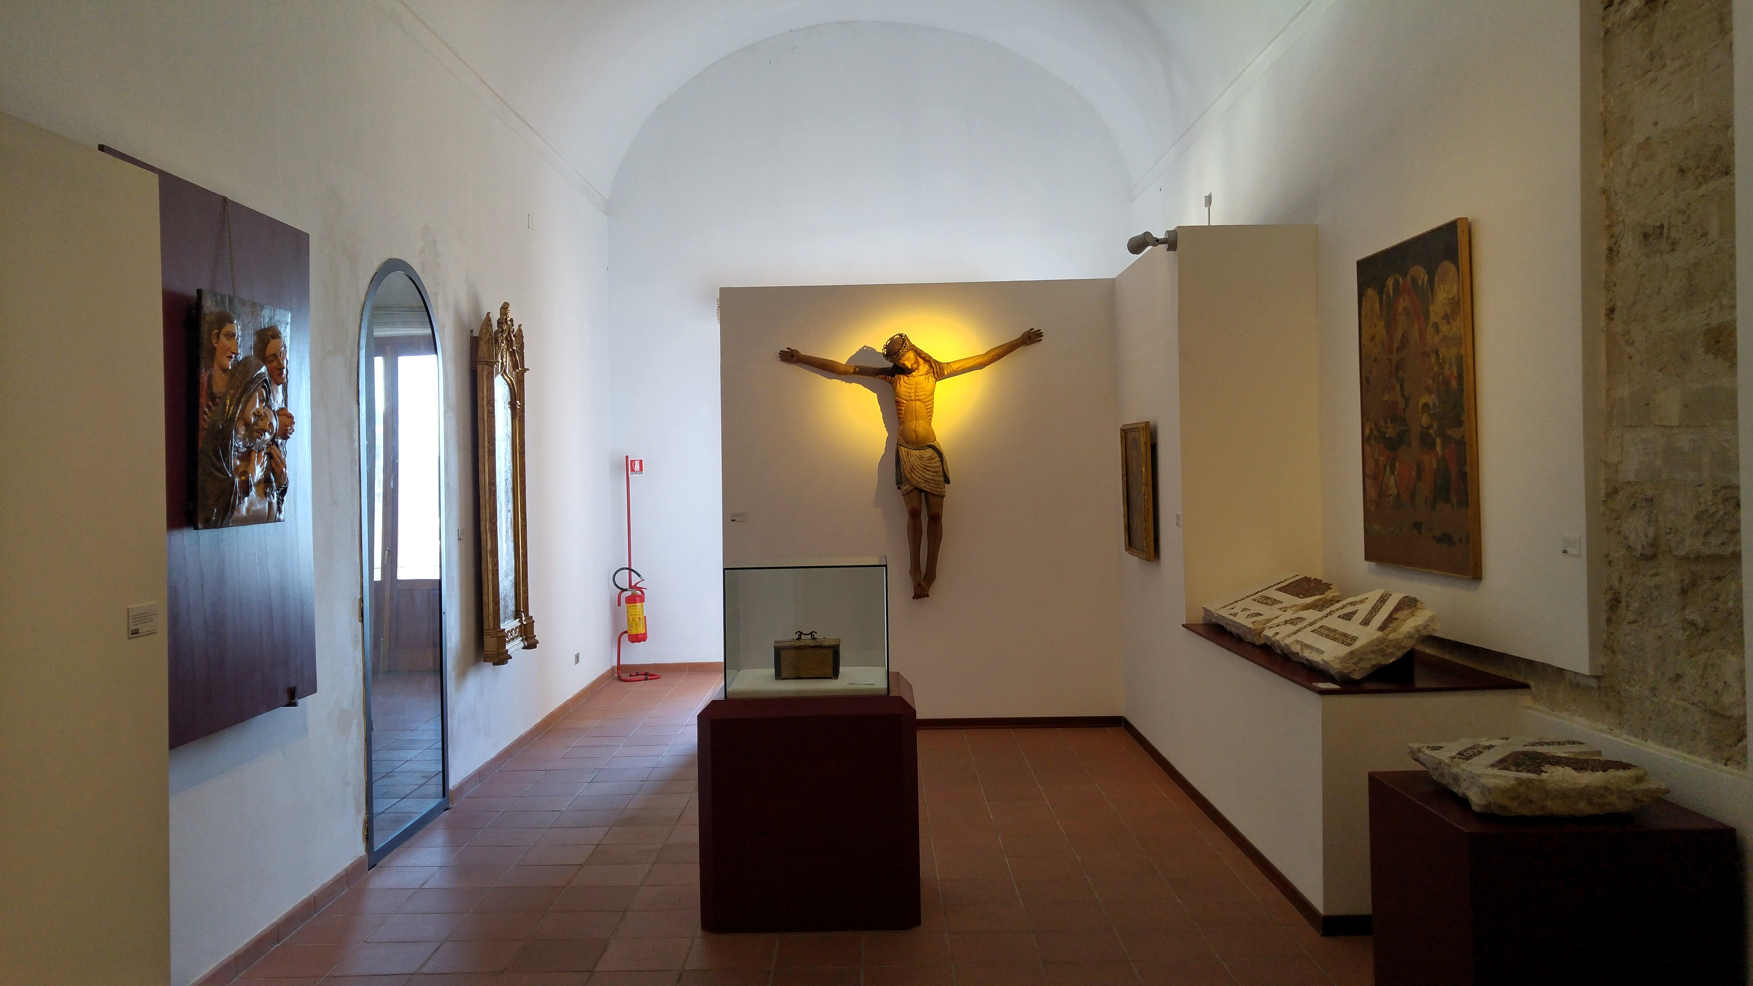 Museo Diocesano de Monreale - 2ª sala expositiva primera planta